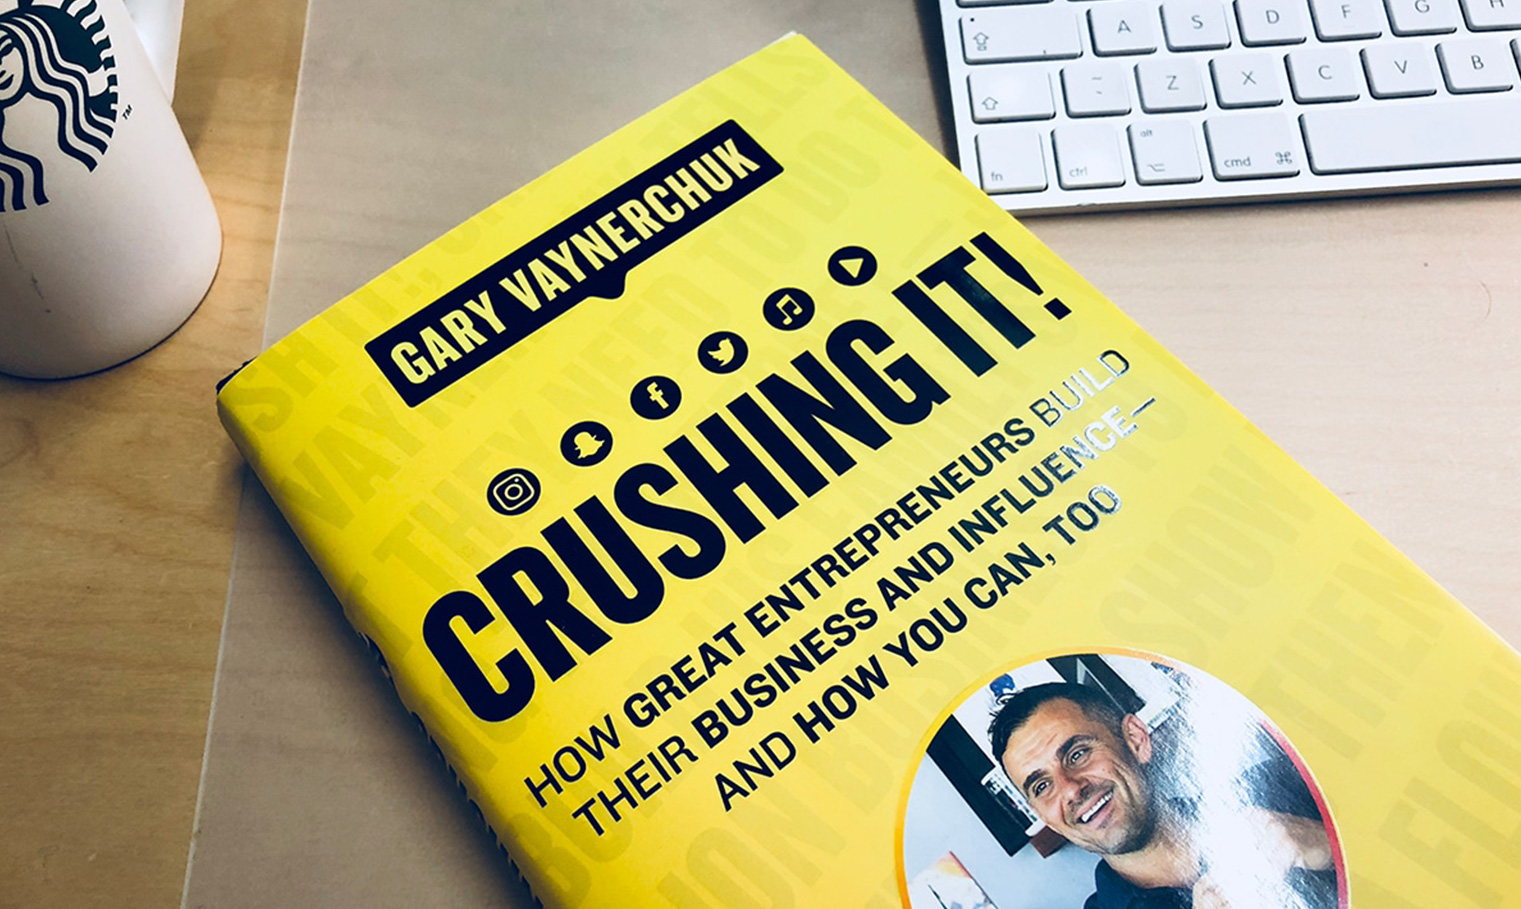 Featured in Gary Vaynerchuk's 'Crushing It' Entrepreneurship Book